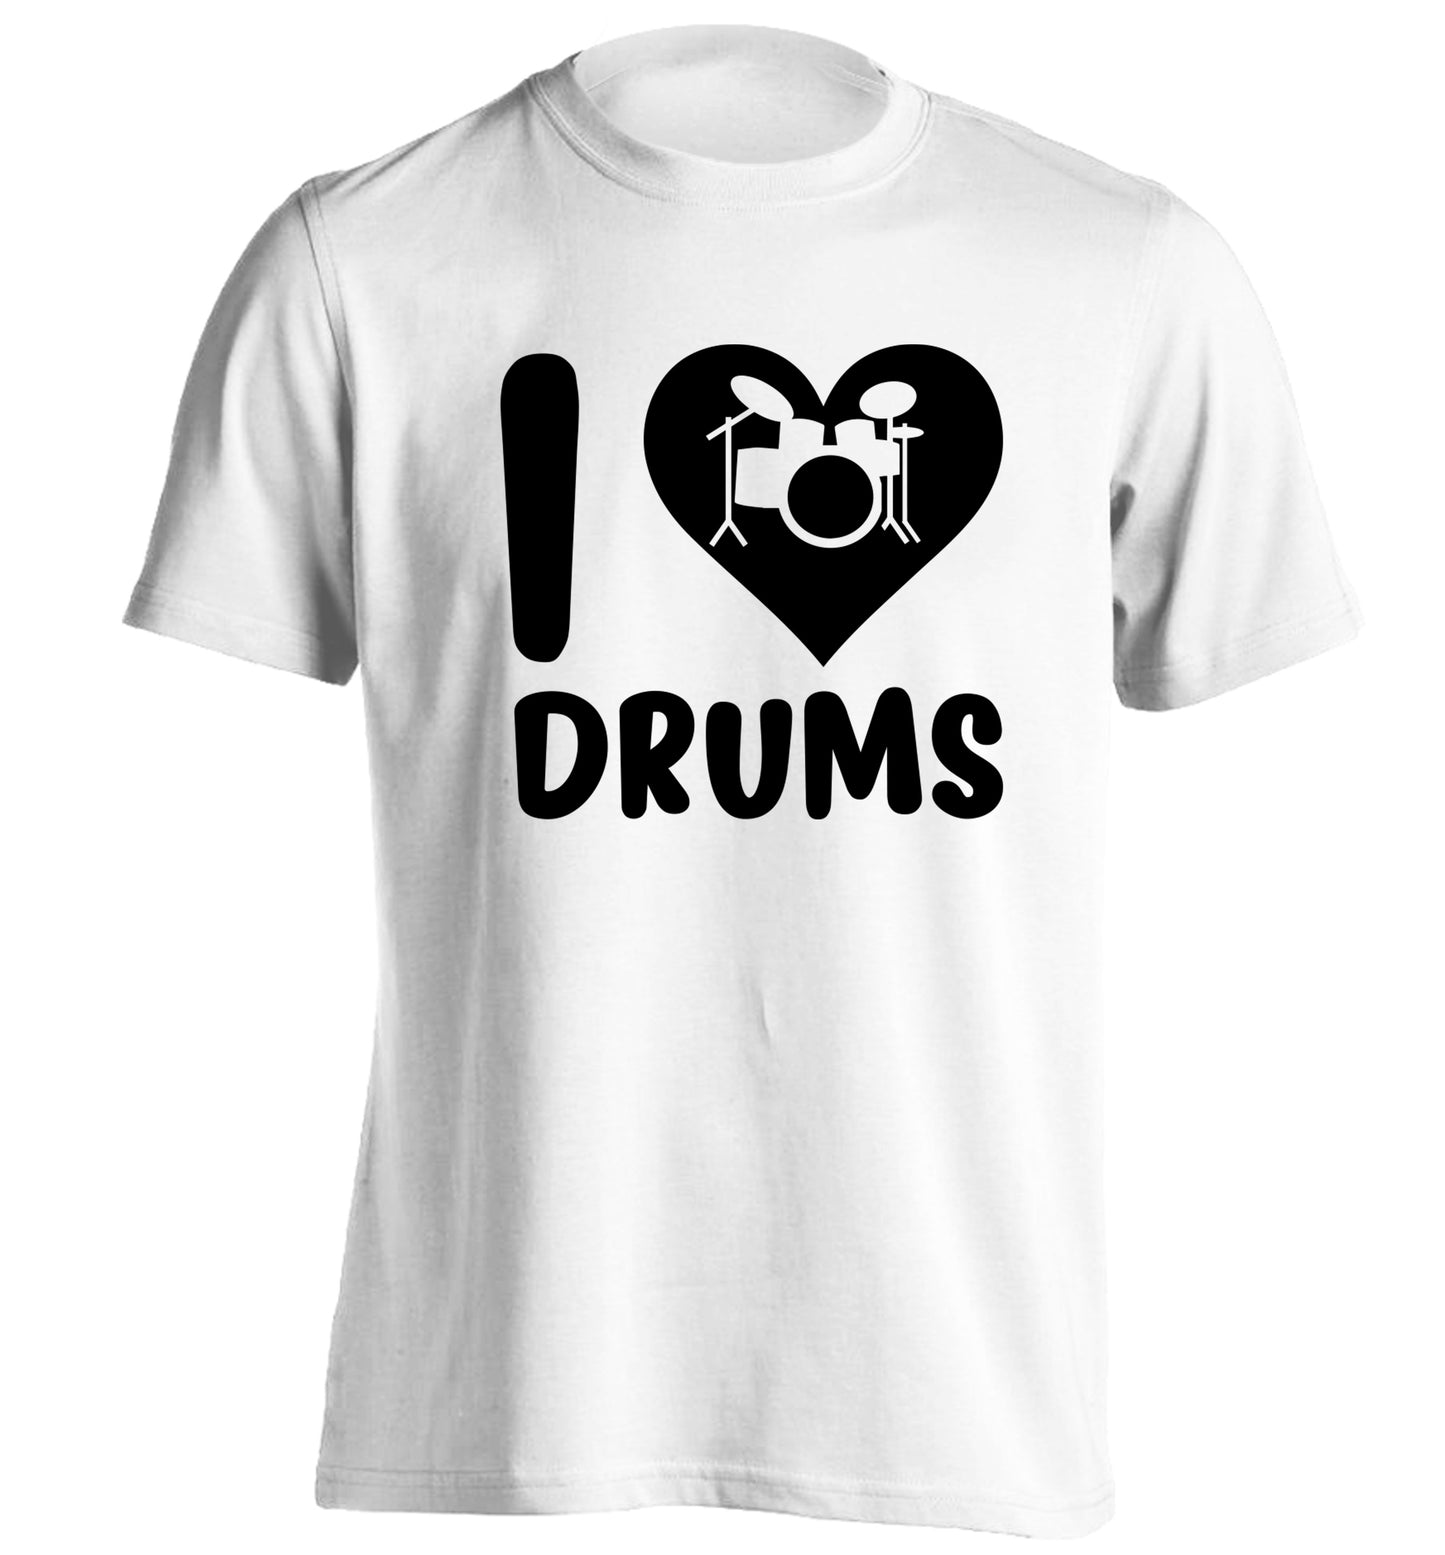 I love drums adults unisex white Tshirt 2XL